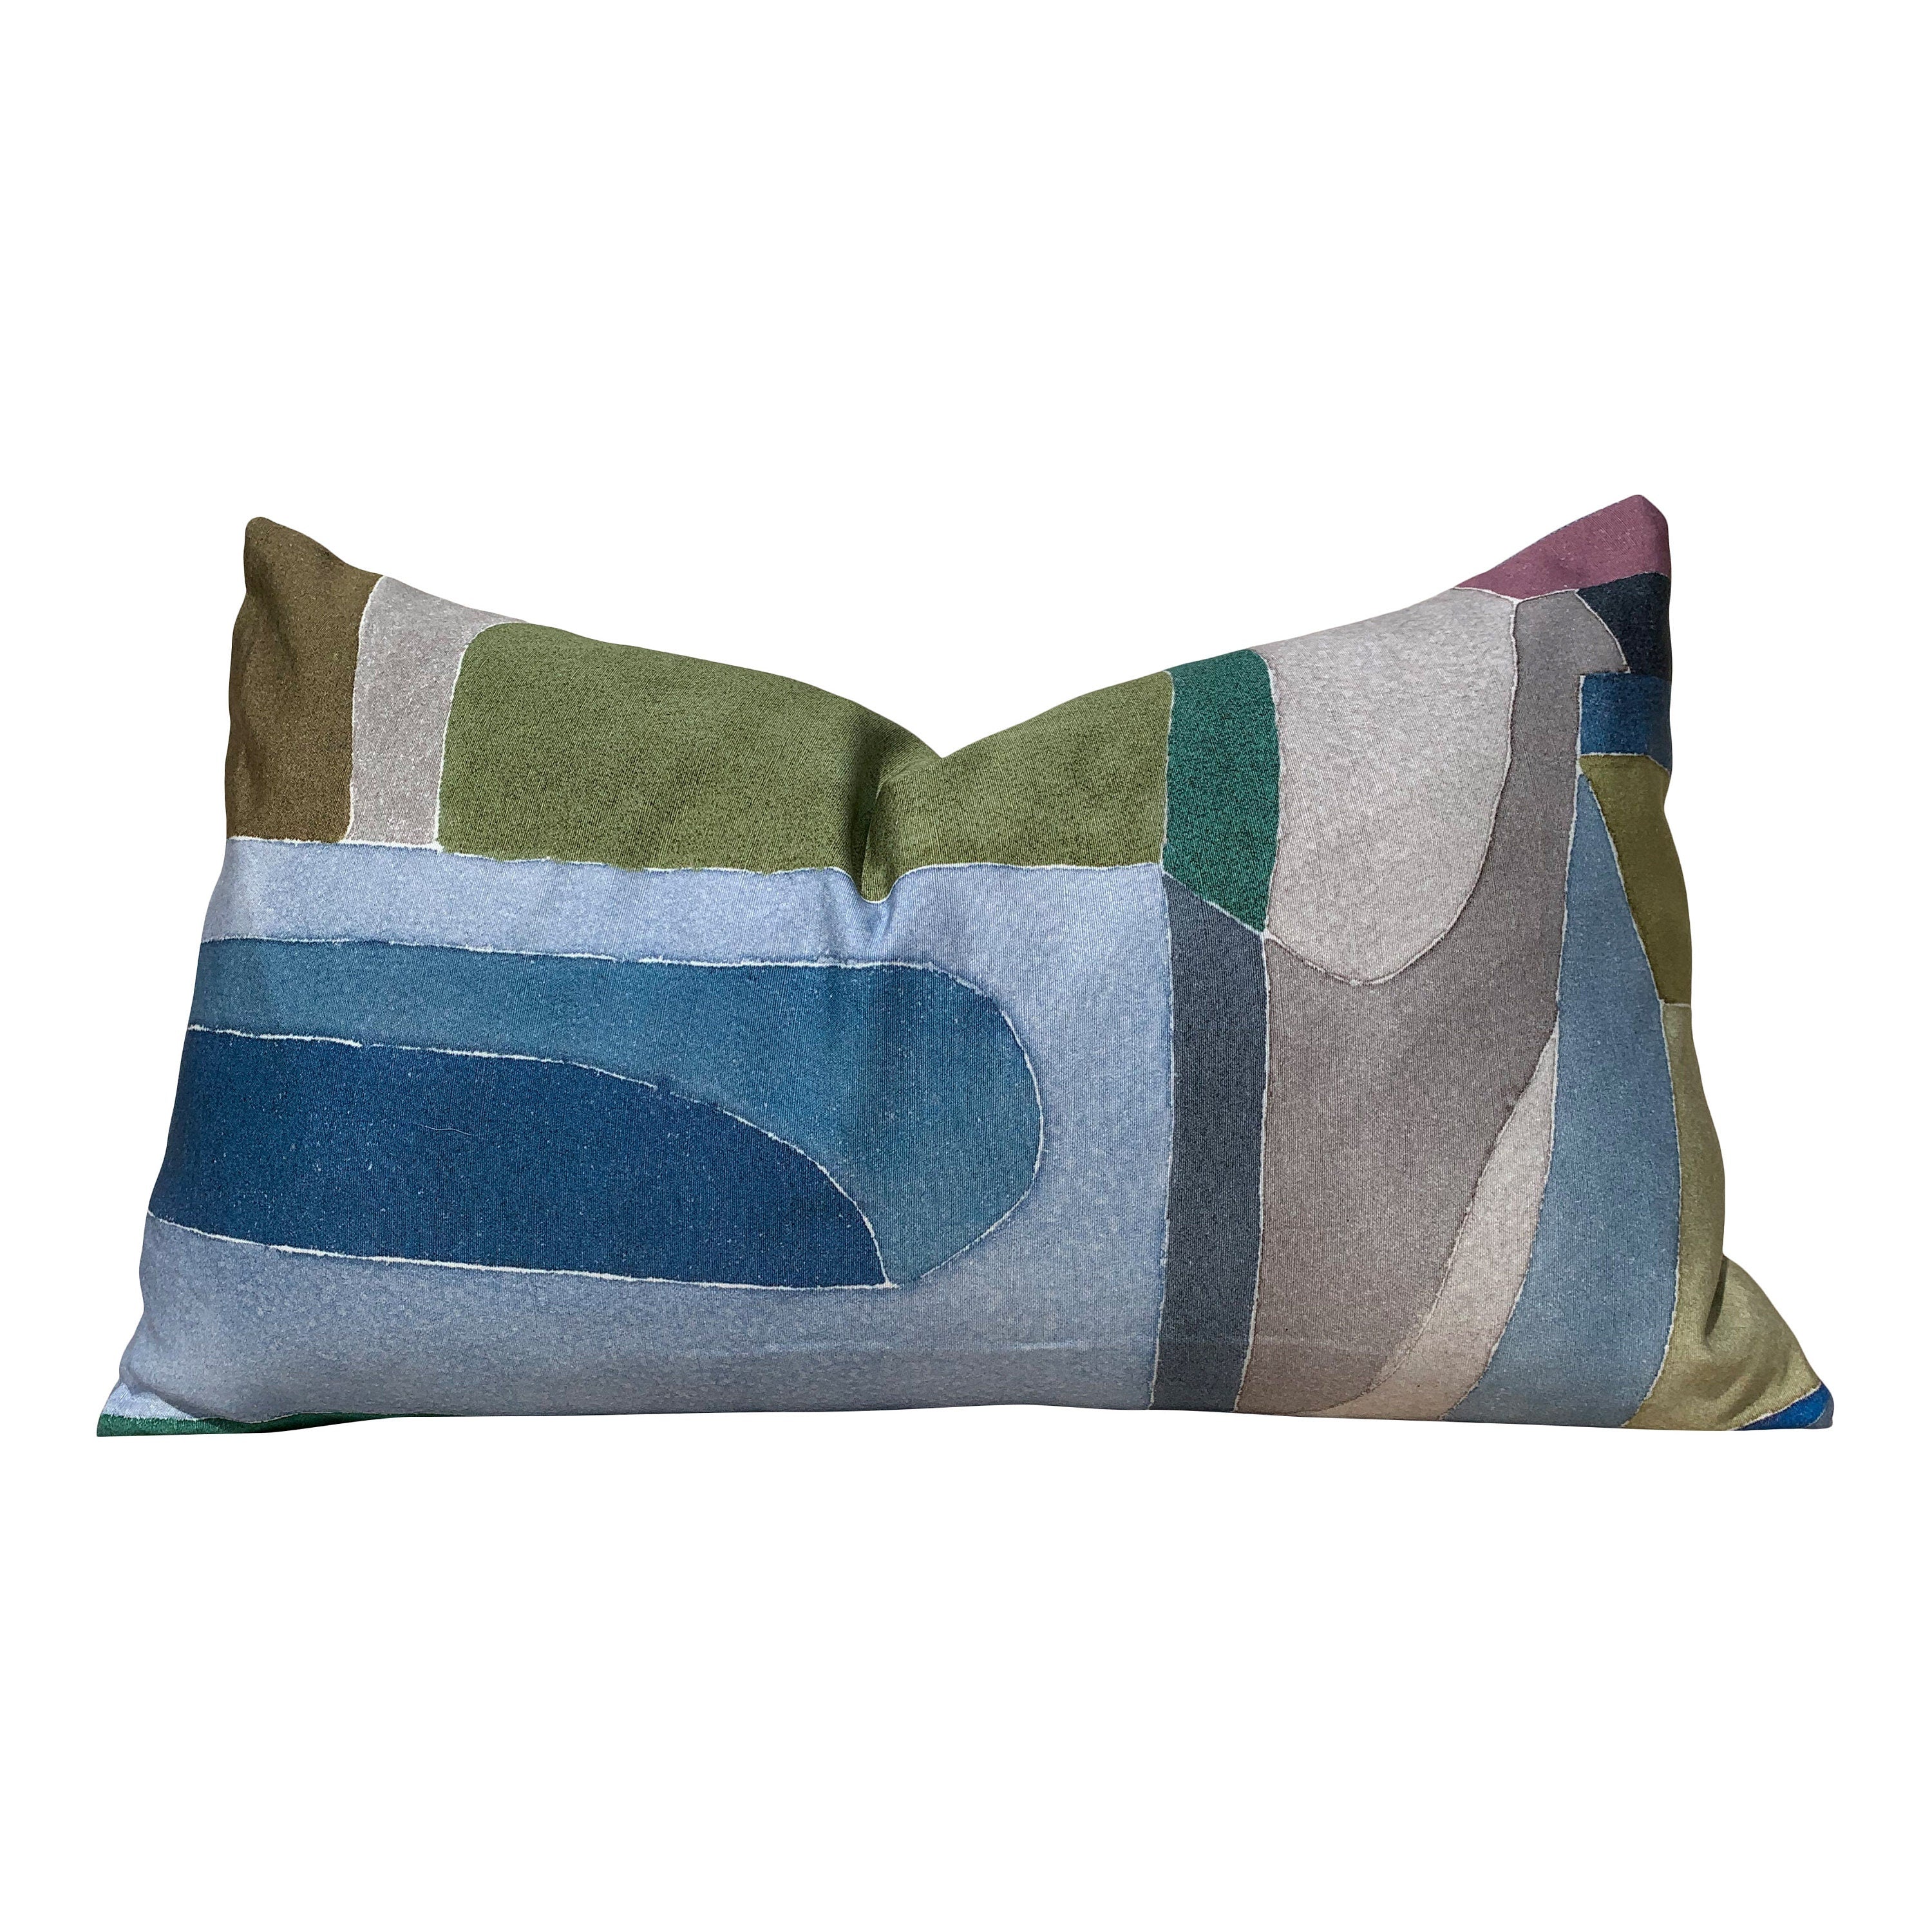 Designer Sahara Pillow in Earth. Multicolored Lumbar Pillow // Olive Green, Blue Pillow Cover // Euro Sham Pillow // Geometric Accent Pillow